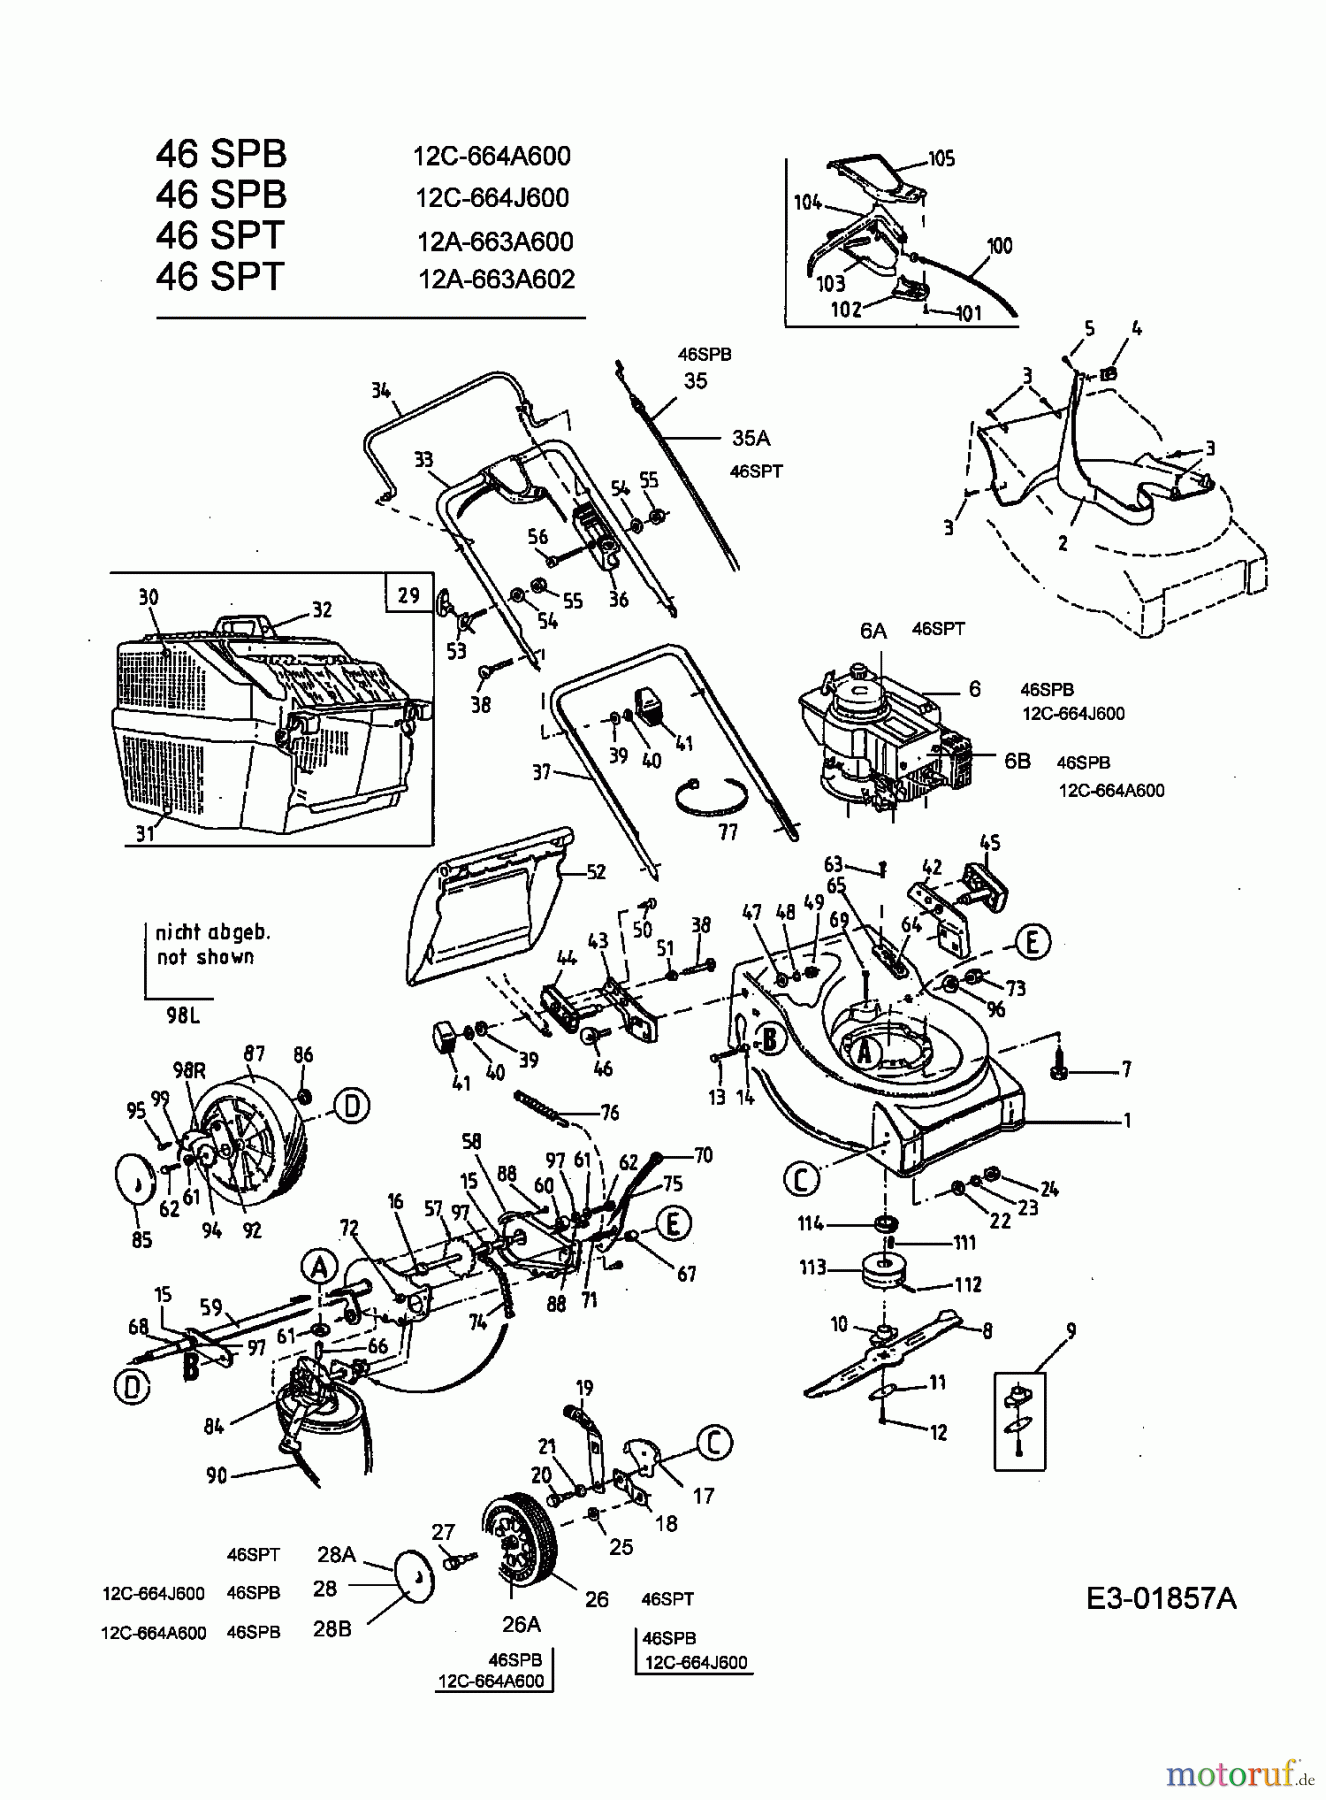  MTD Motormäher mit Antrieb 46 SPT 12A-663A602  (2003) Grundgerät